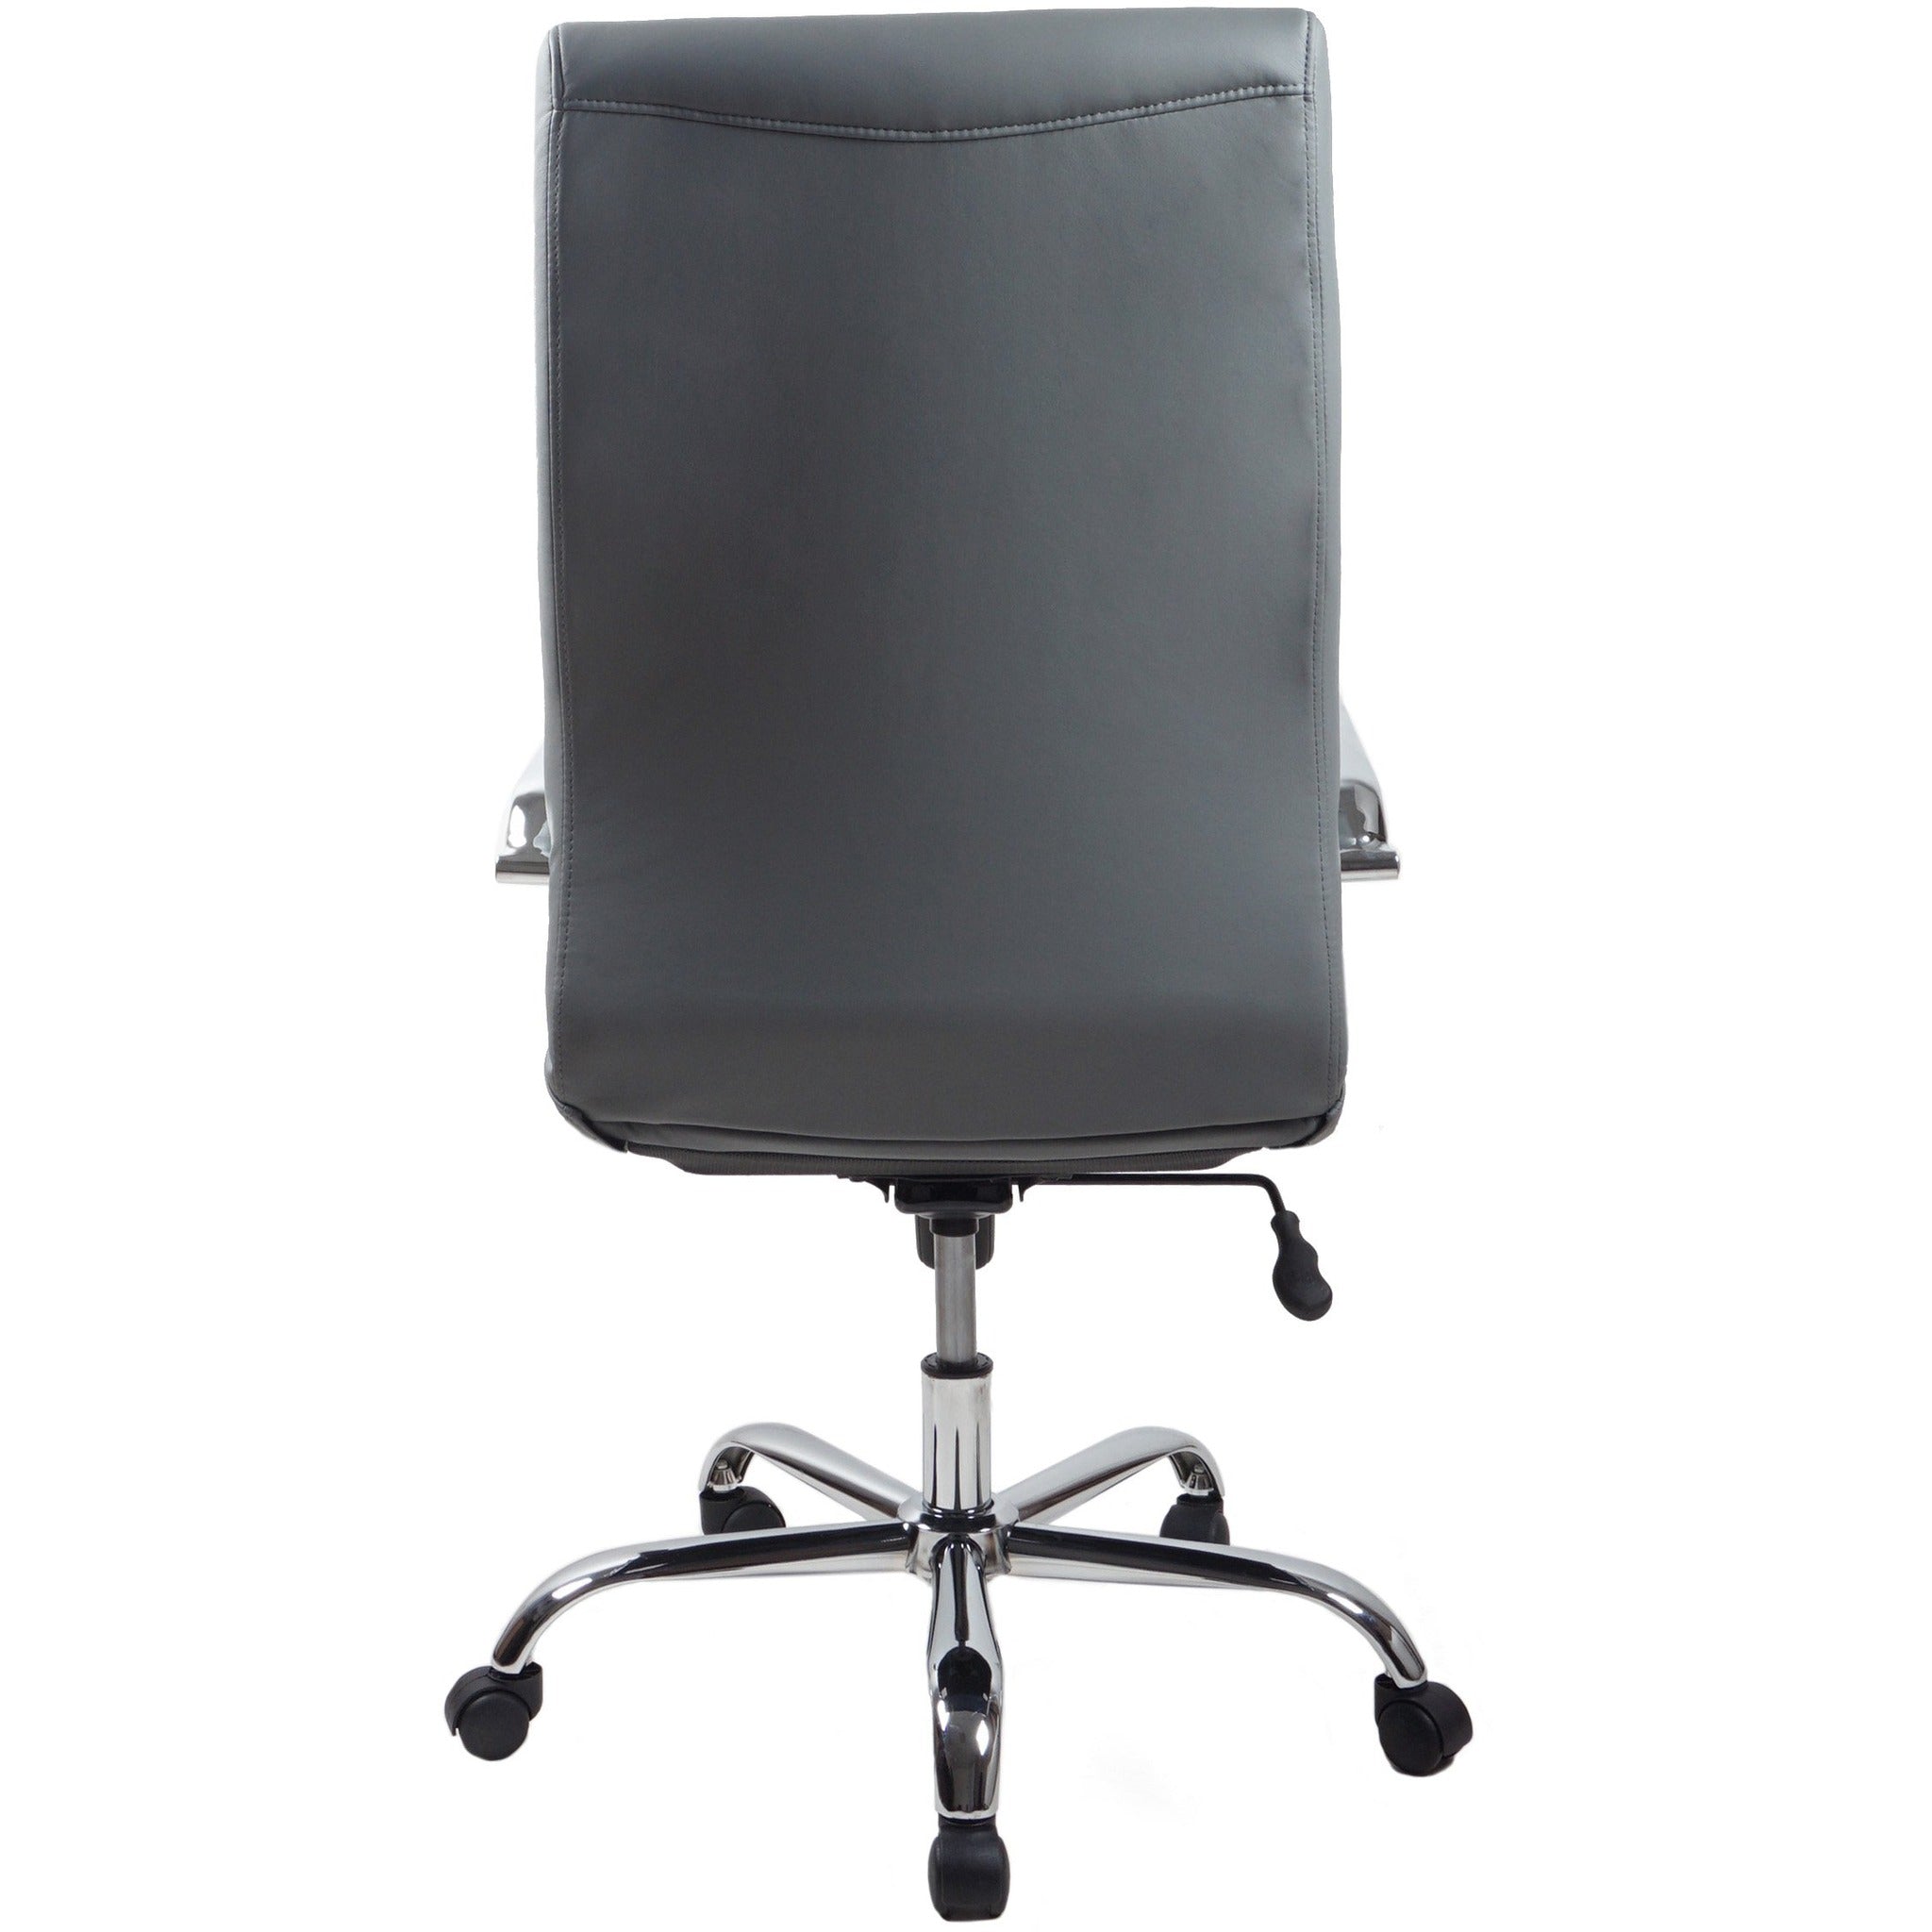 RealBiz II Modern Comfort Series High-Back LeatherPro Chair, Slate Gray